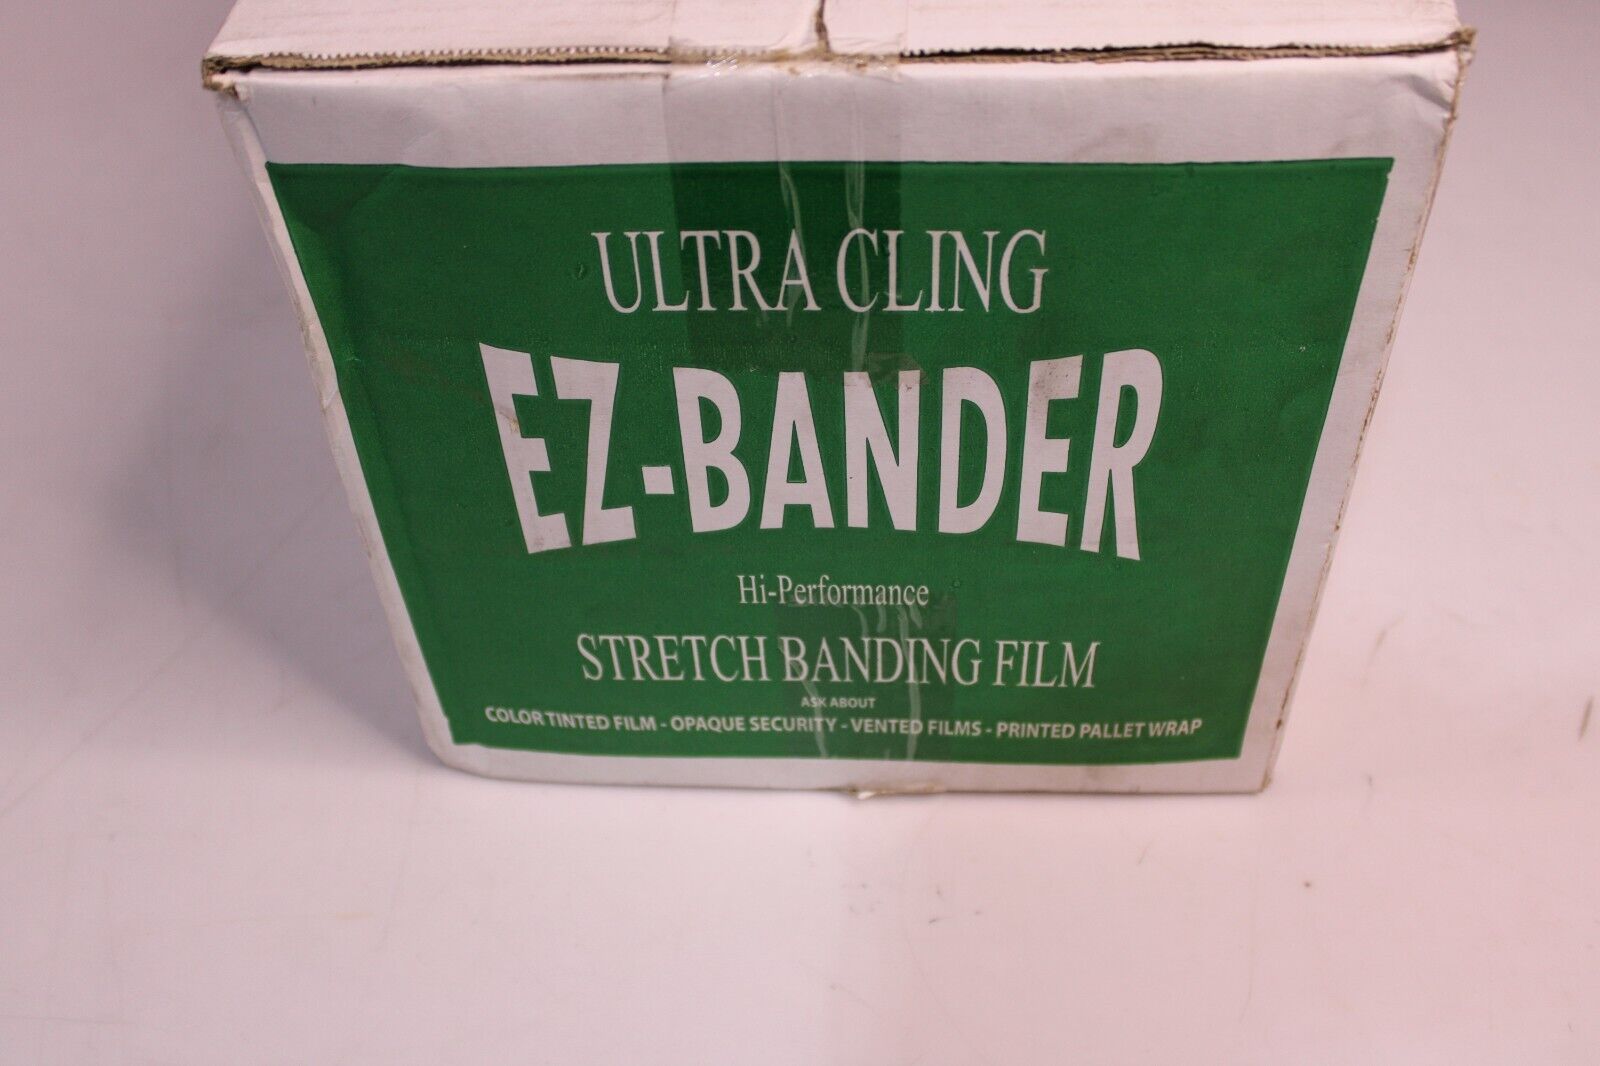 NEW Ultra Cling EZ-BANDER High Performance Stretch Banding Film Full Case(18)